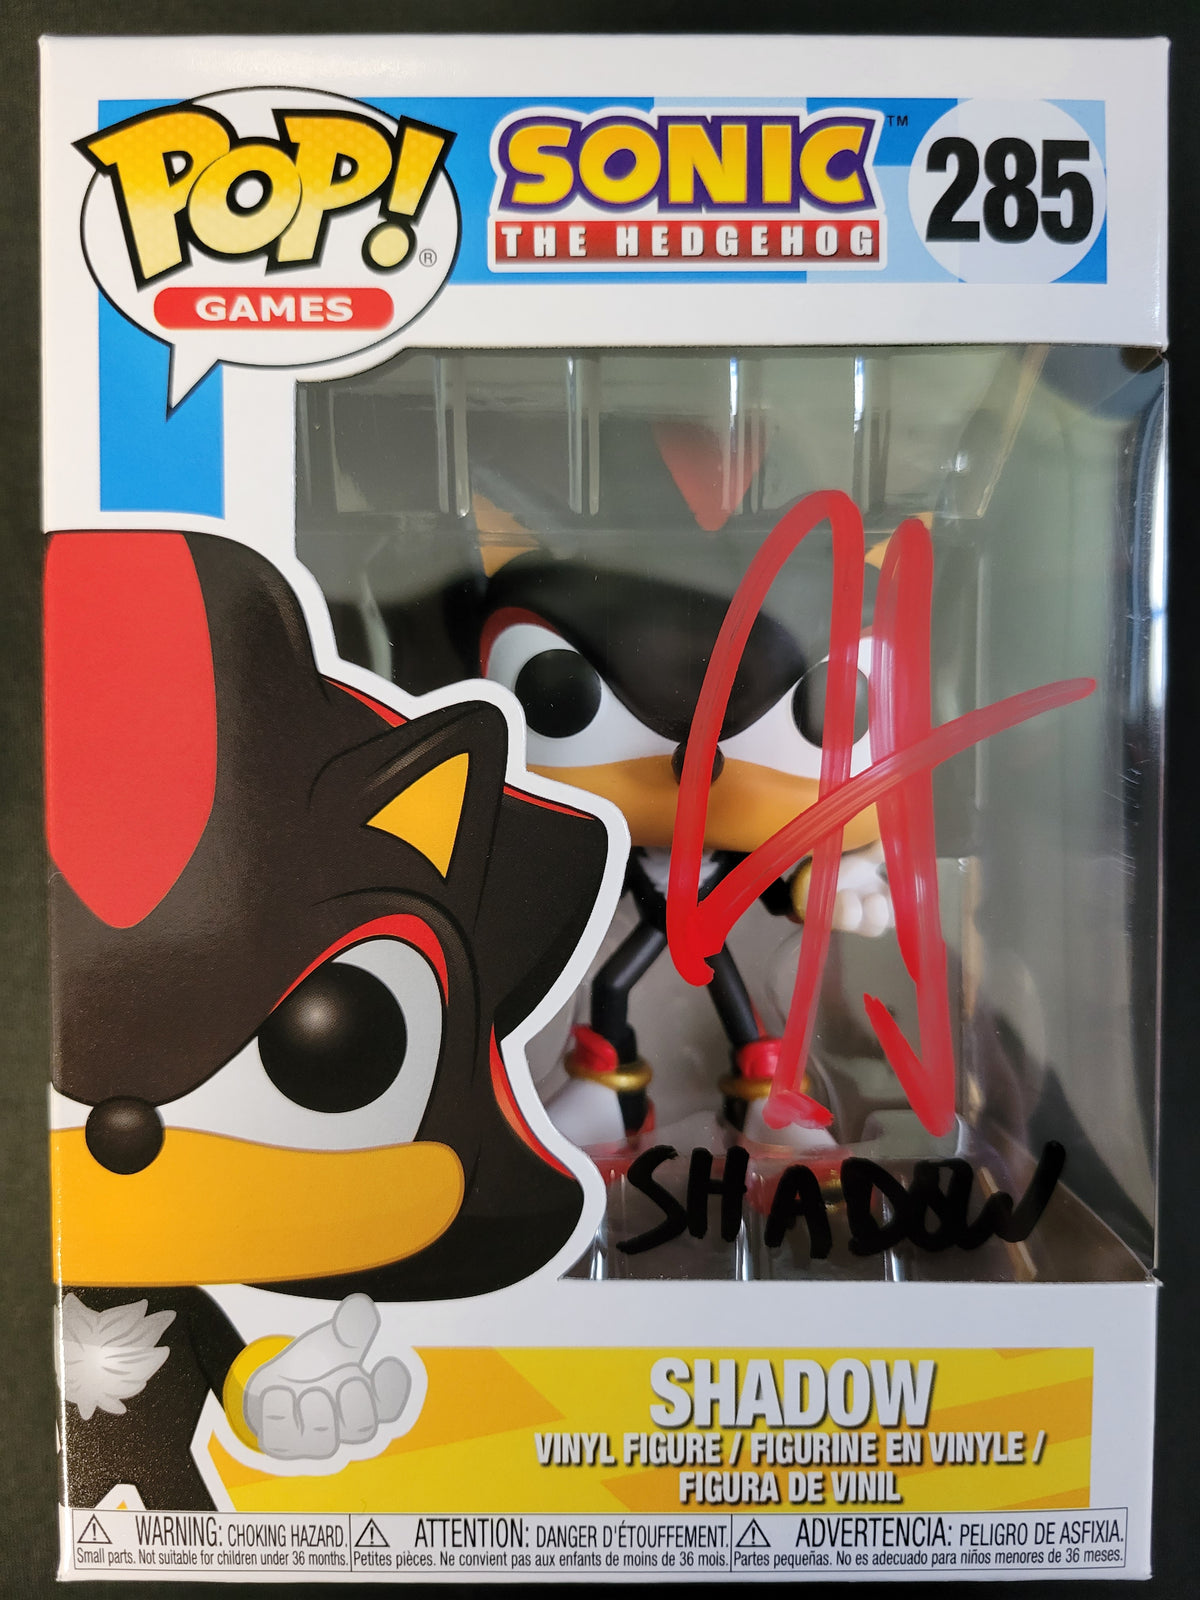 Funko Pop: Shadow The Hedgehog #285 Autographed by Jason Griffith - Cert 706